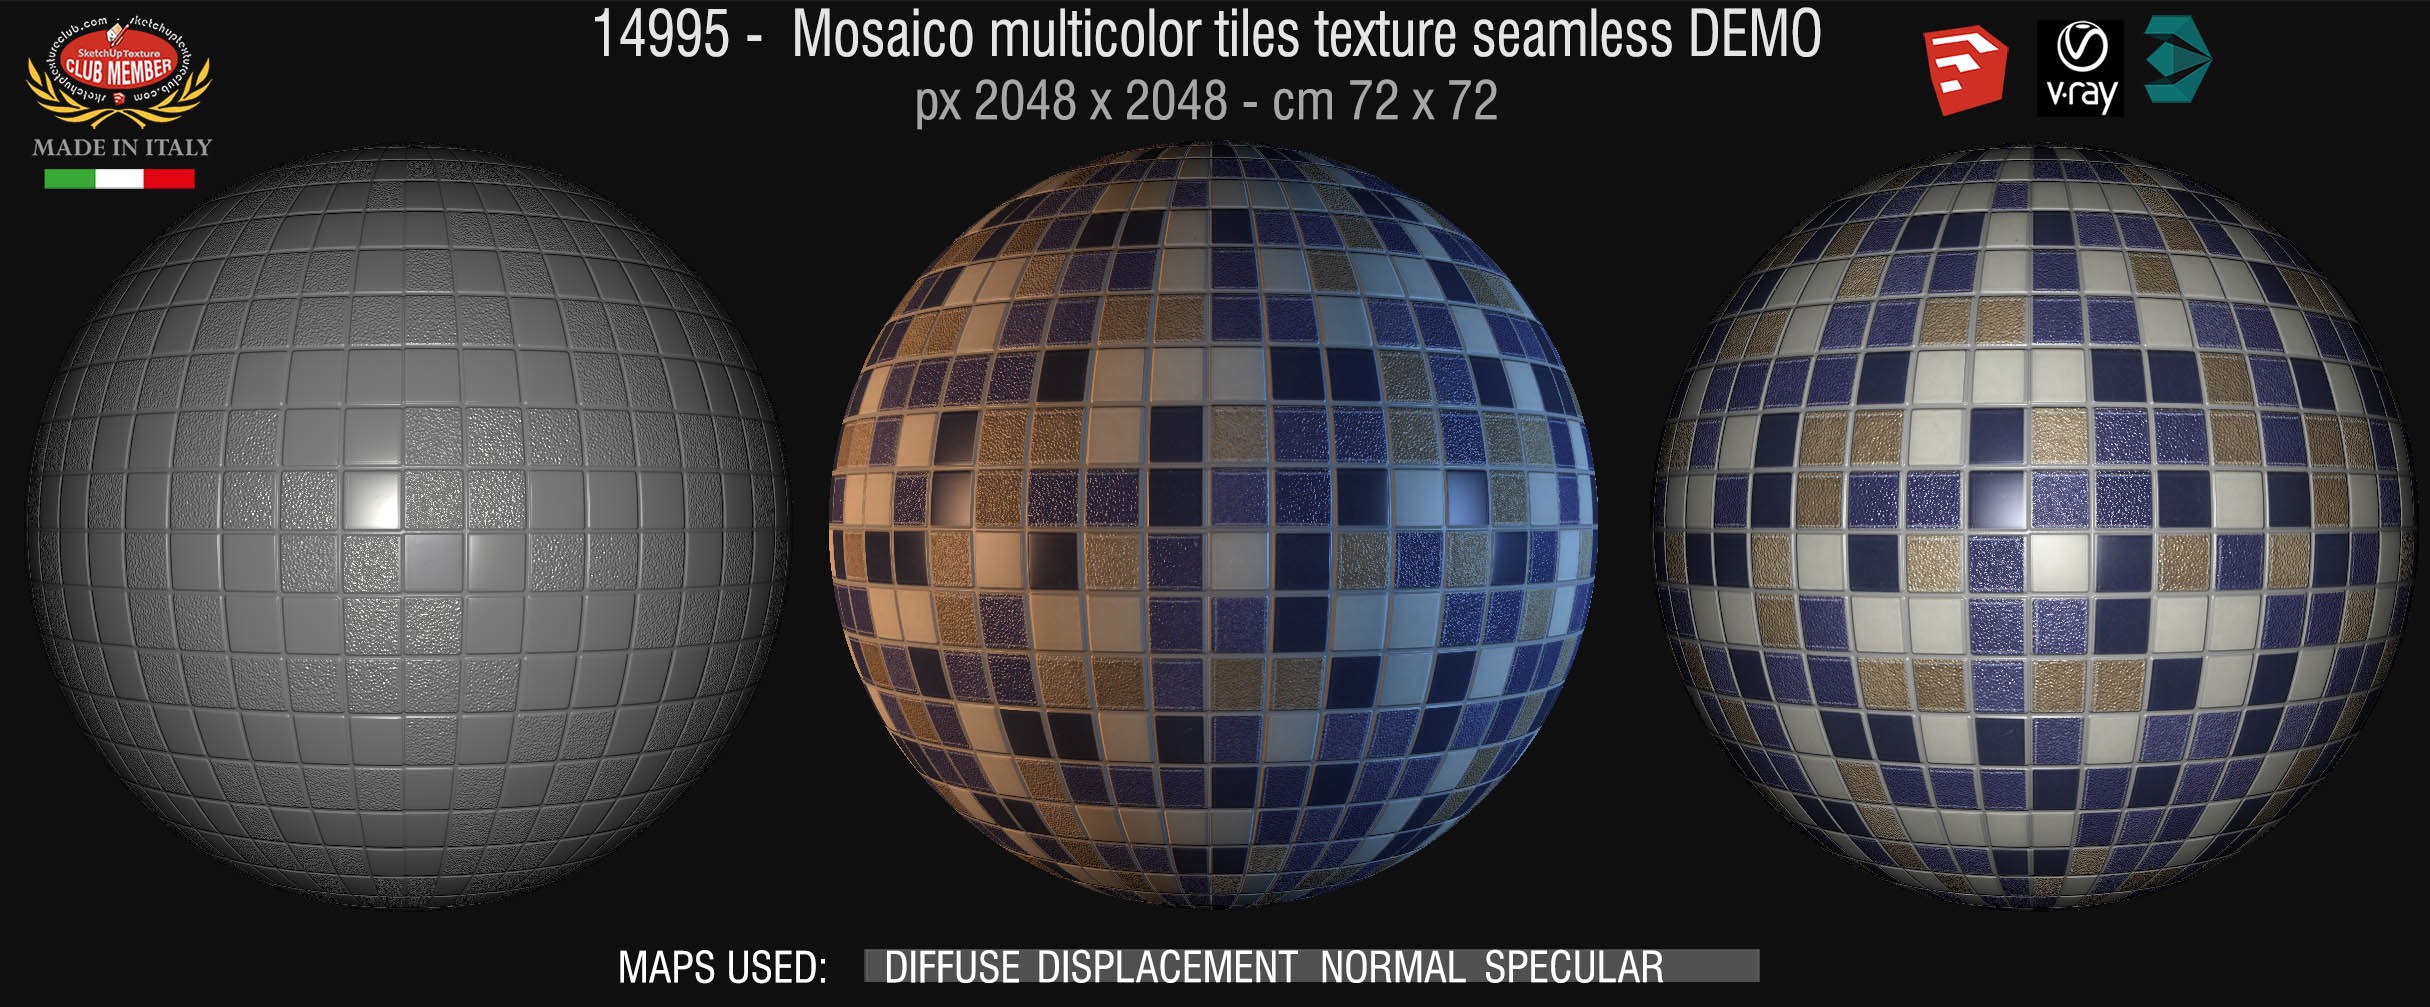 14995 Mosaico multicolor tiles texture seamless + maps DEMO